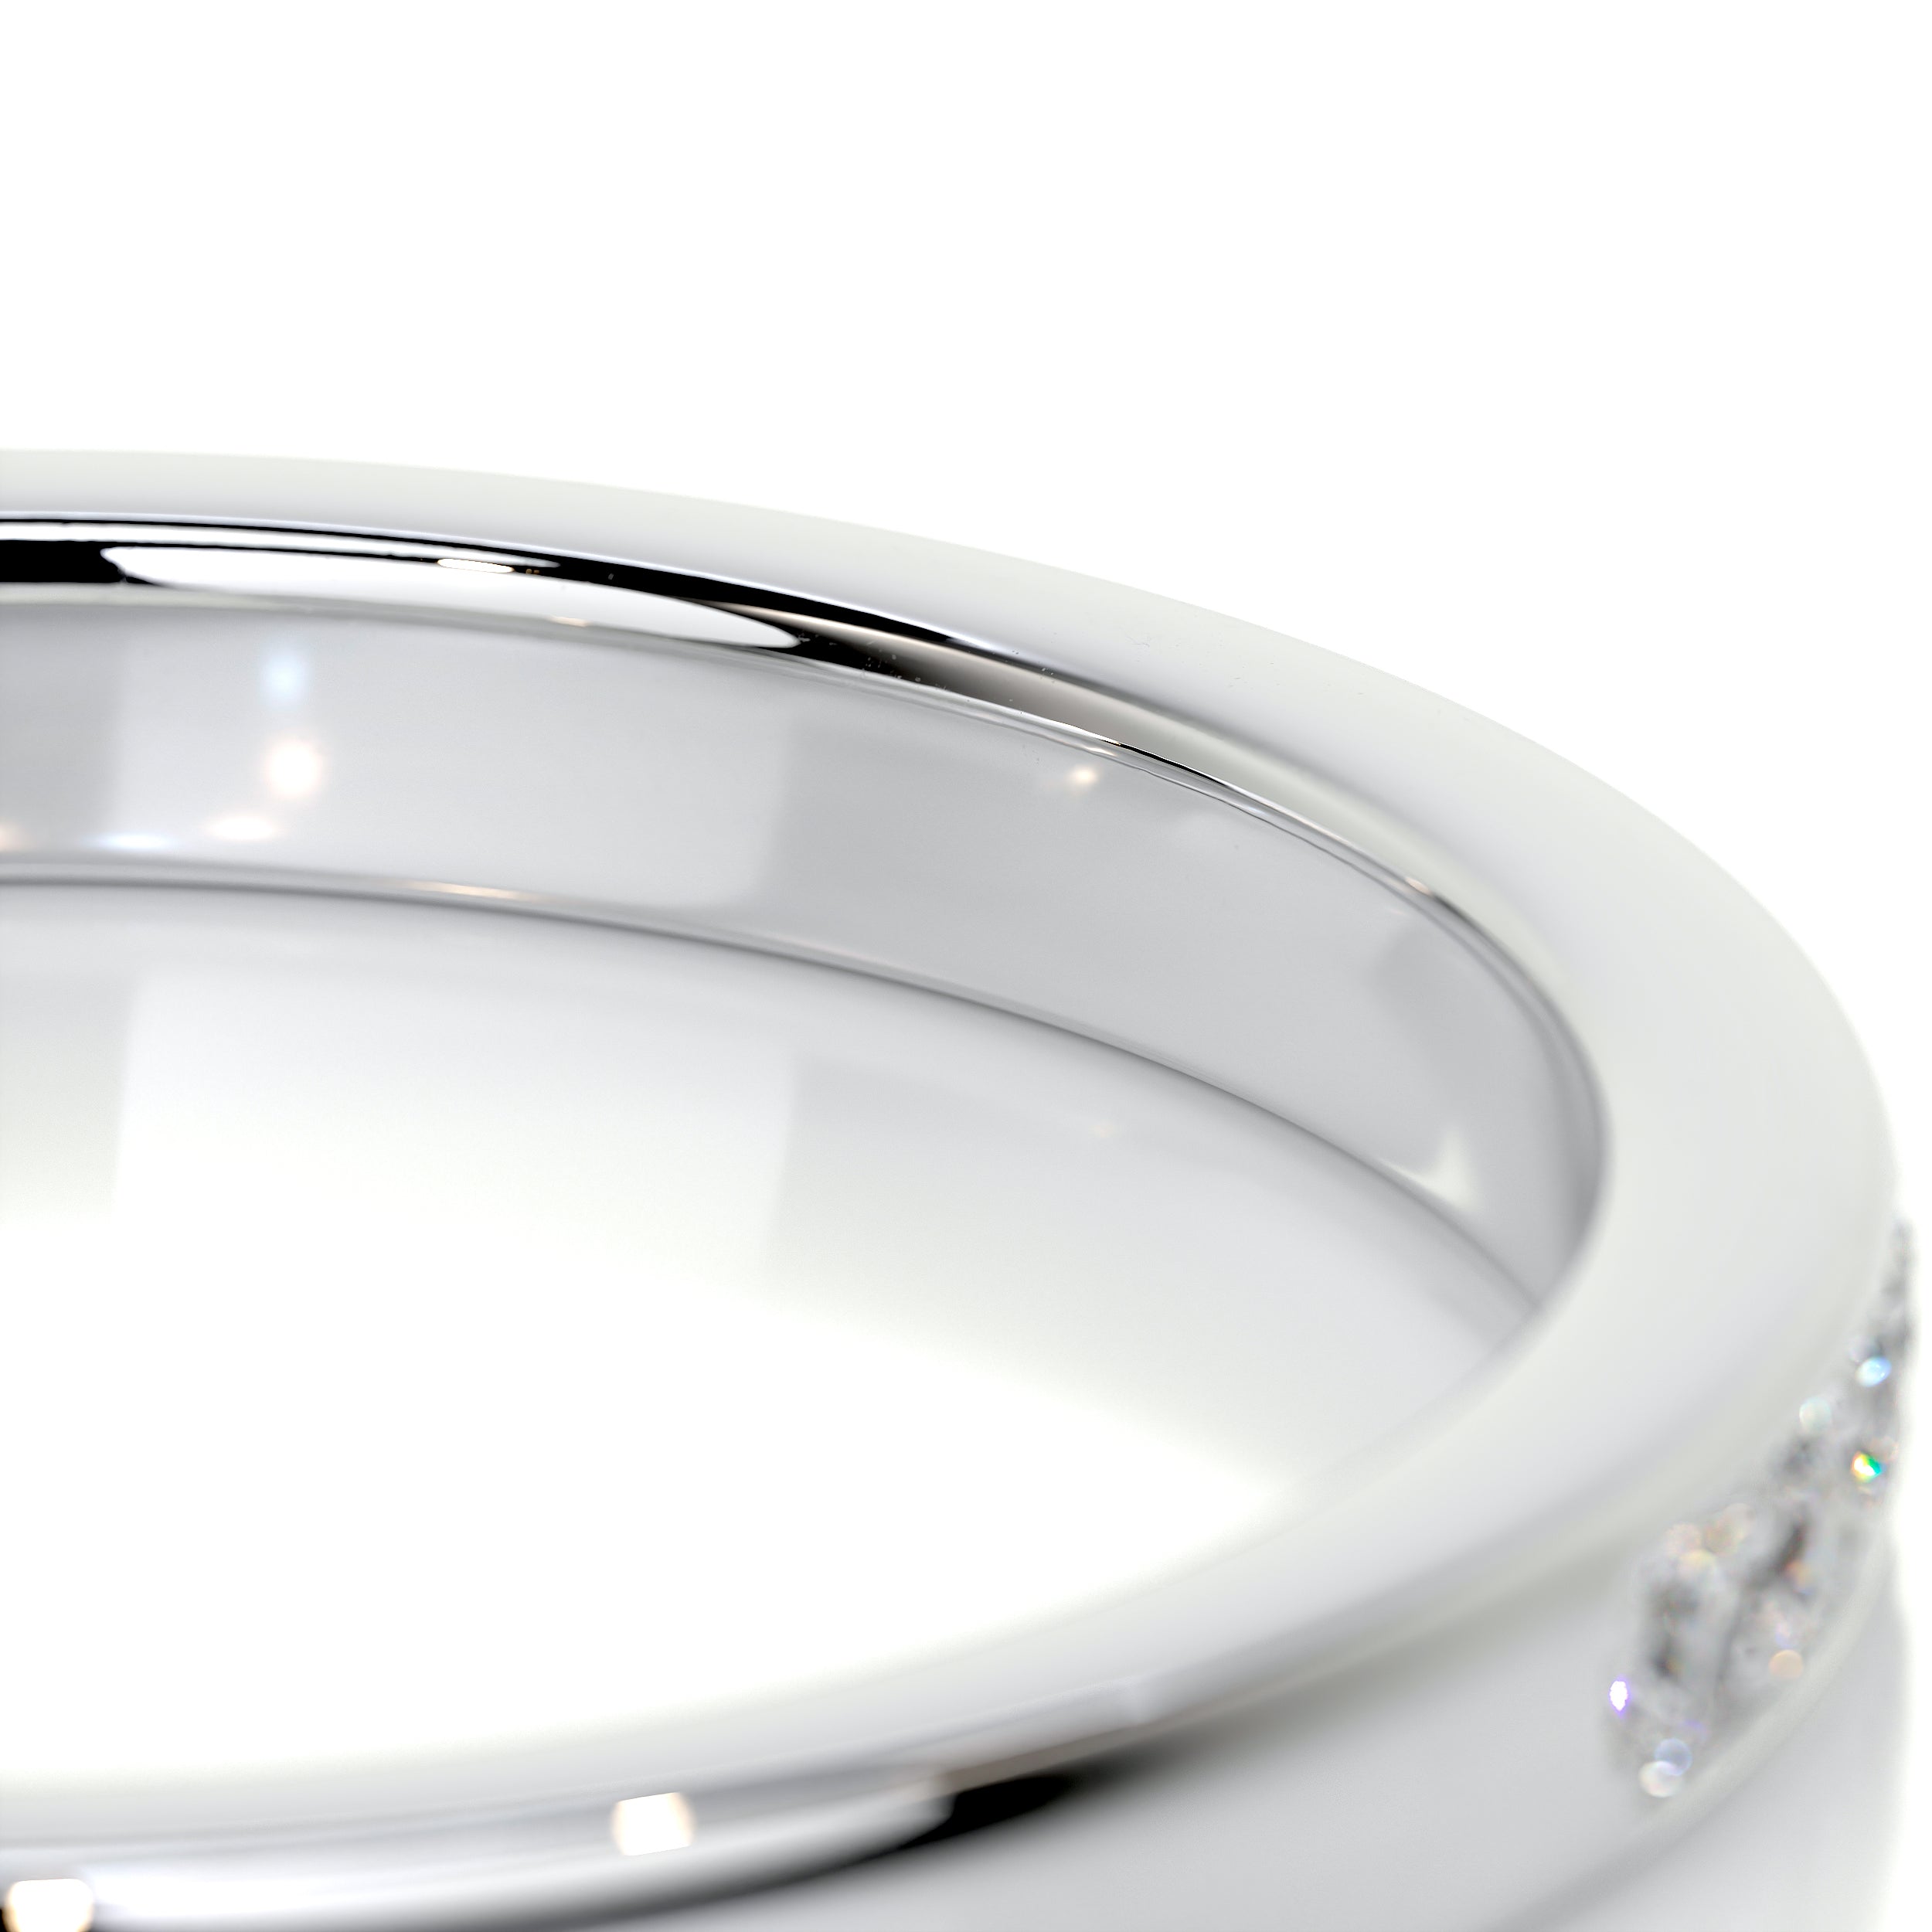 Giselle Diamond Wedding Ring   (0.2 Carat) -18K White Gold